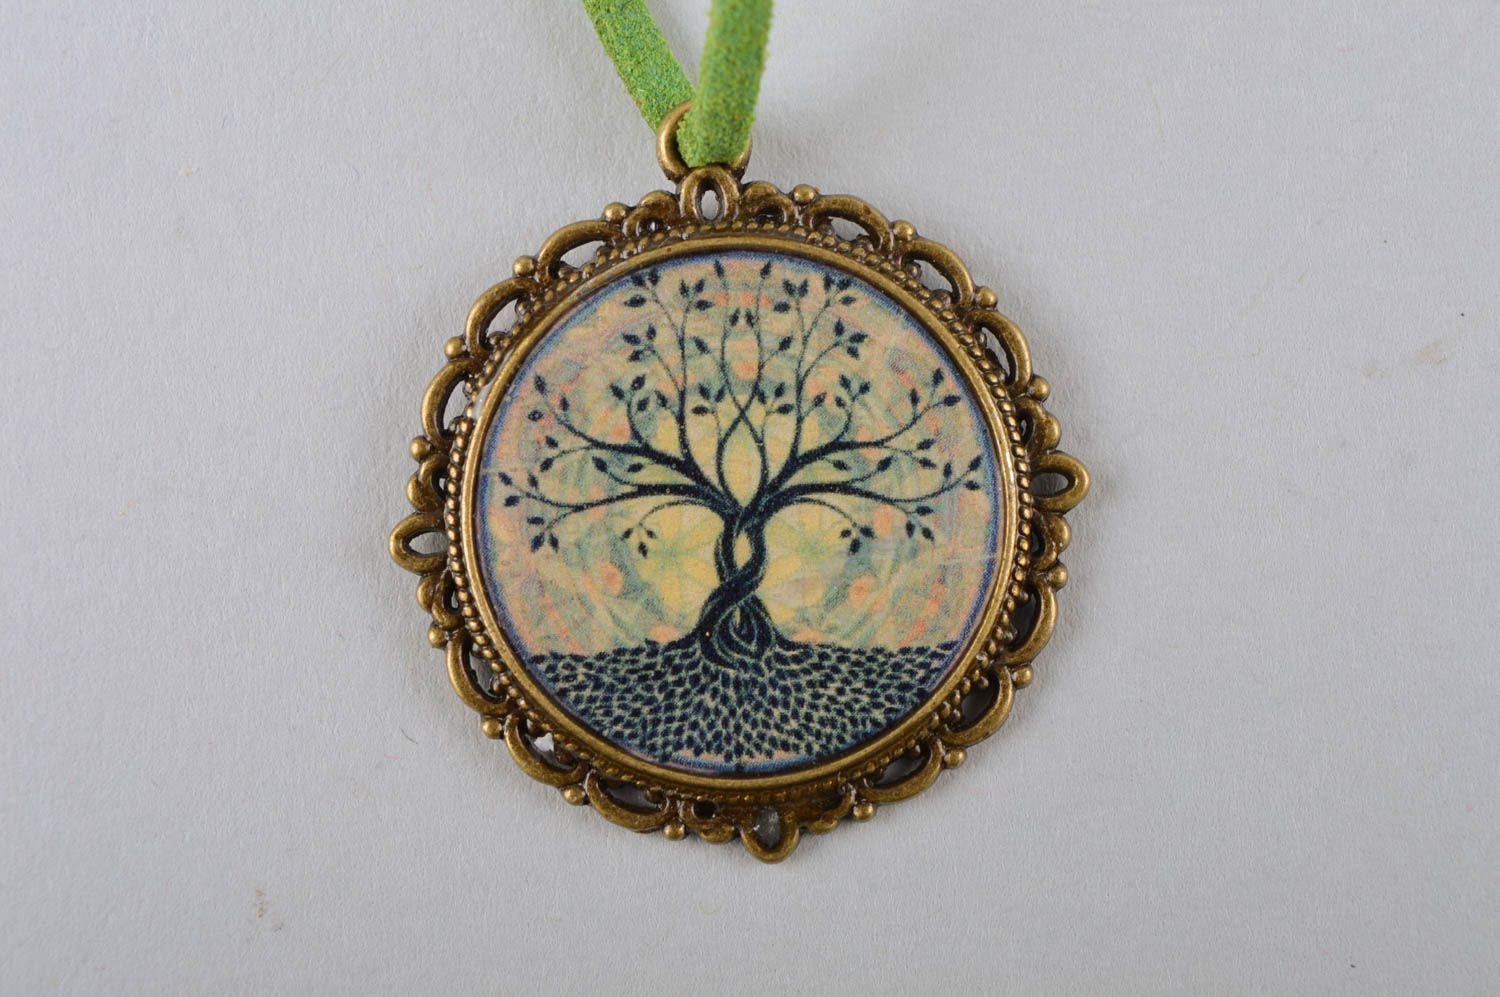 Unusual handmade necklace designs metal pendant beautiful jewellery gift ideas photo 3